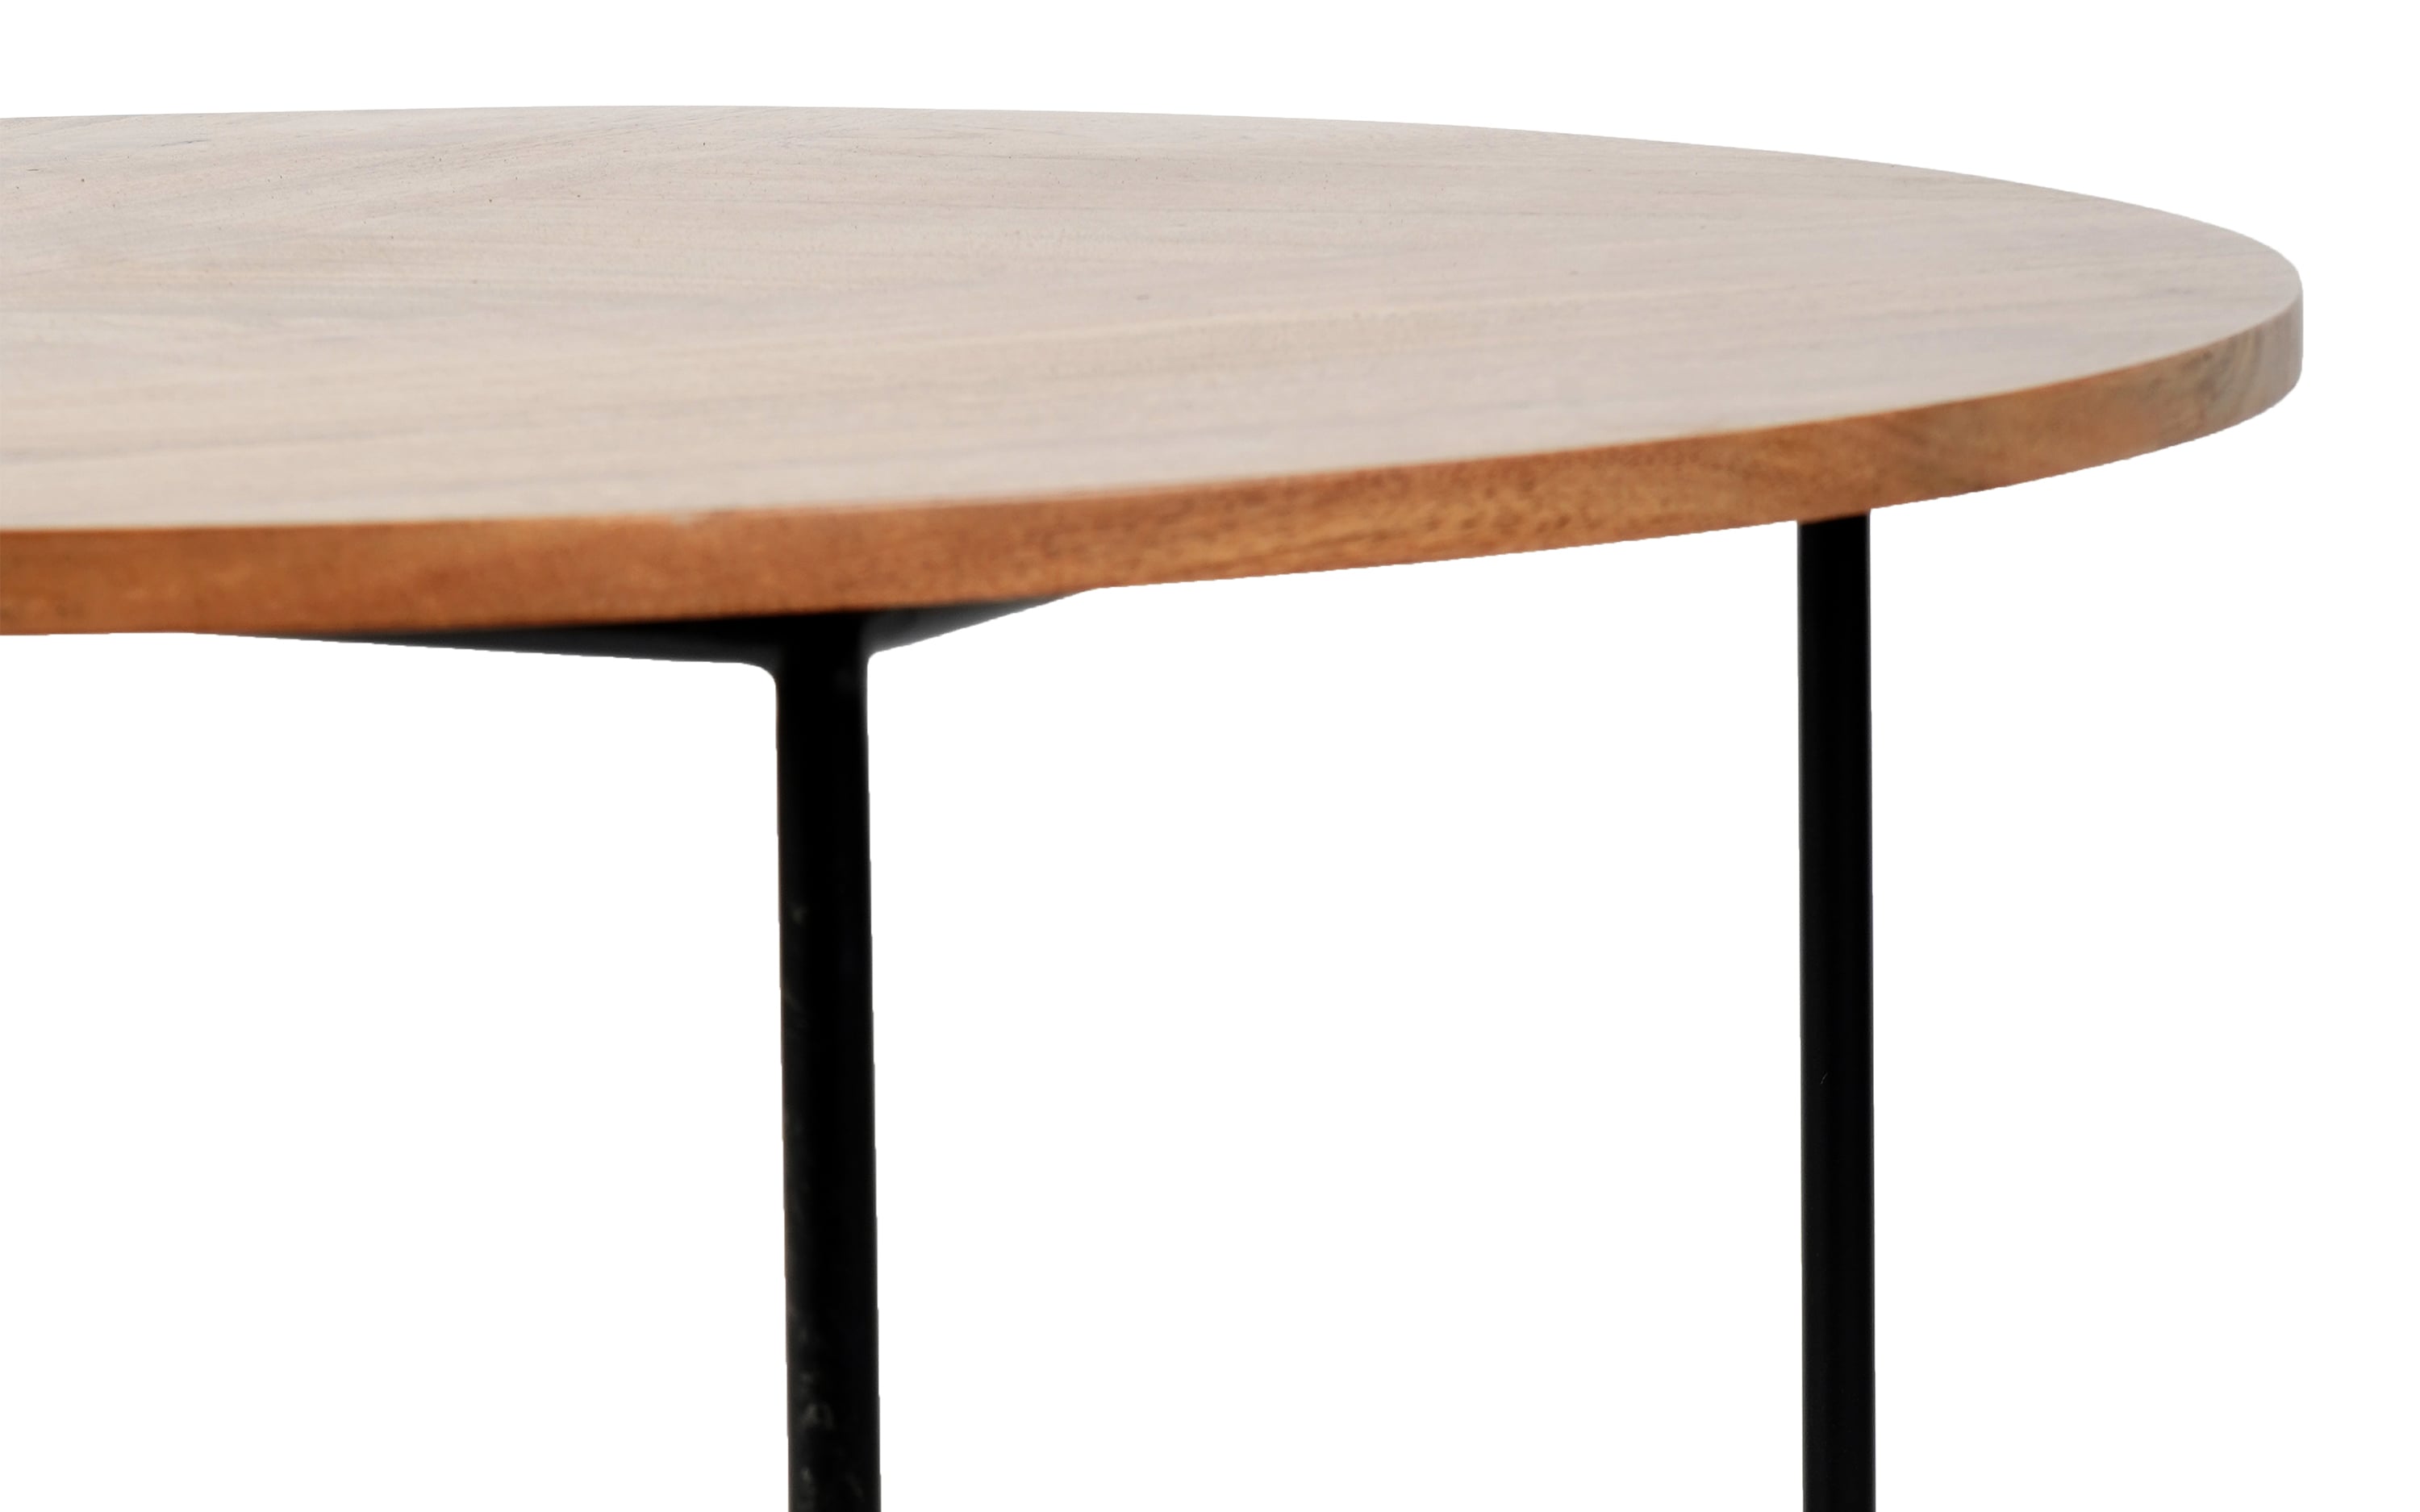 Stylish Sleek Coffee Table for living Room - Orange Tree 